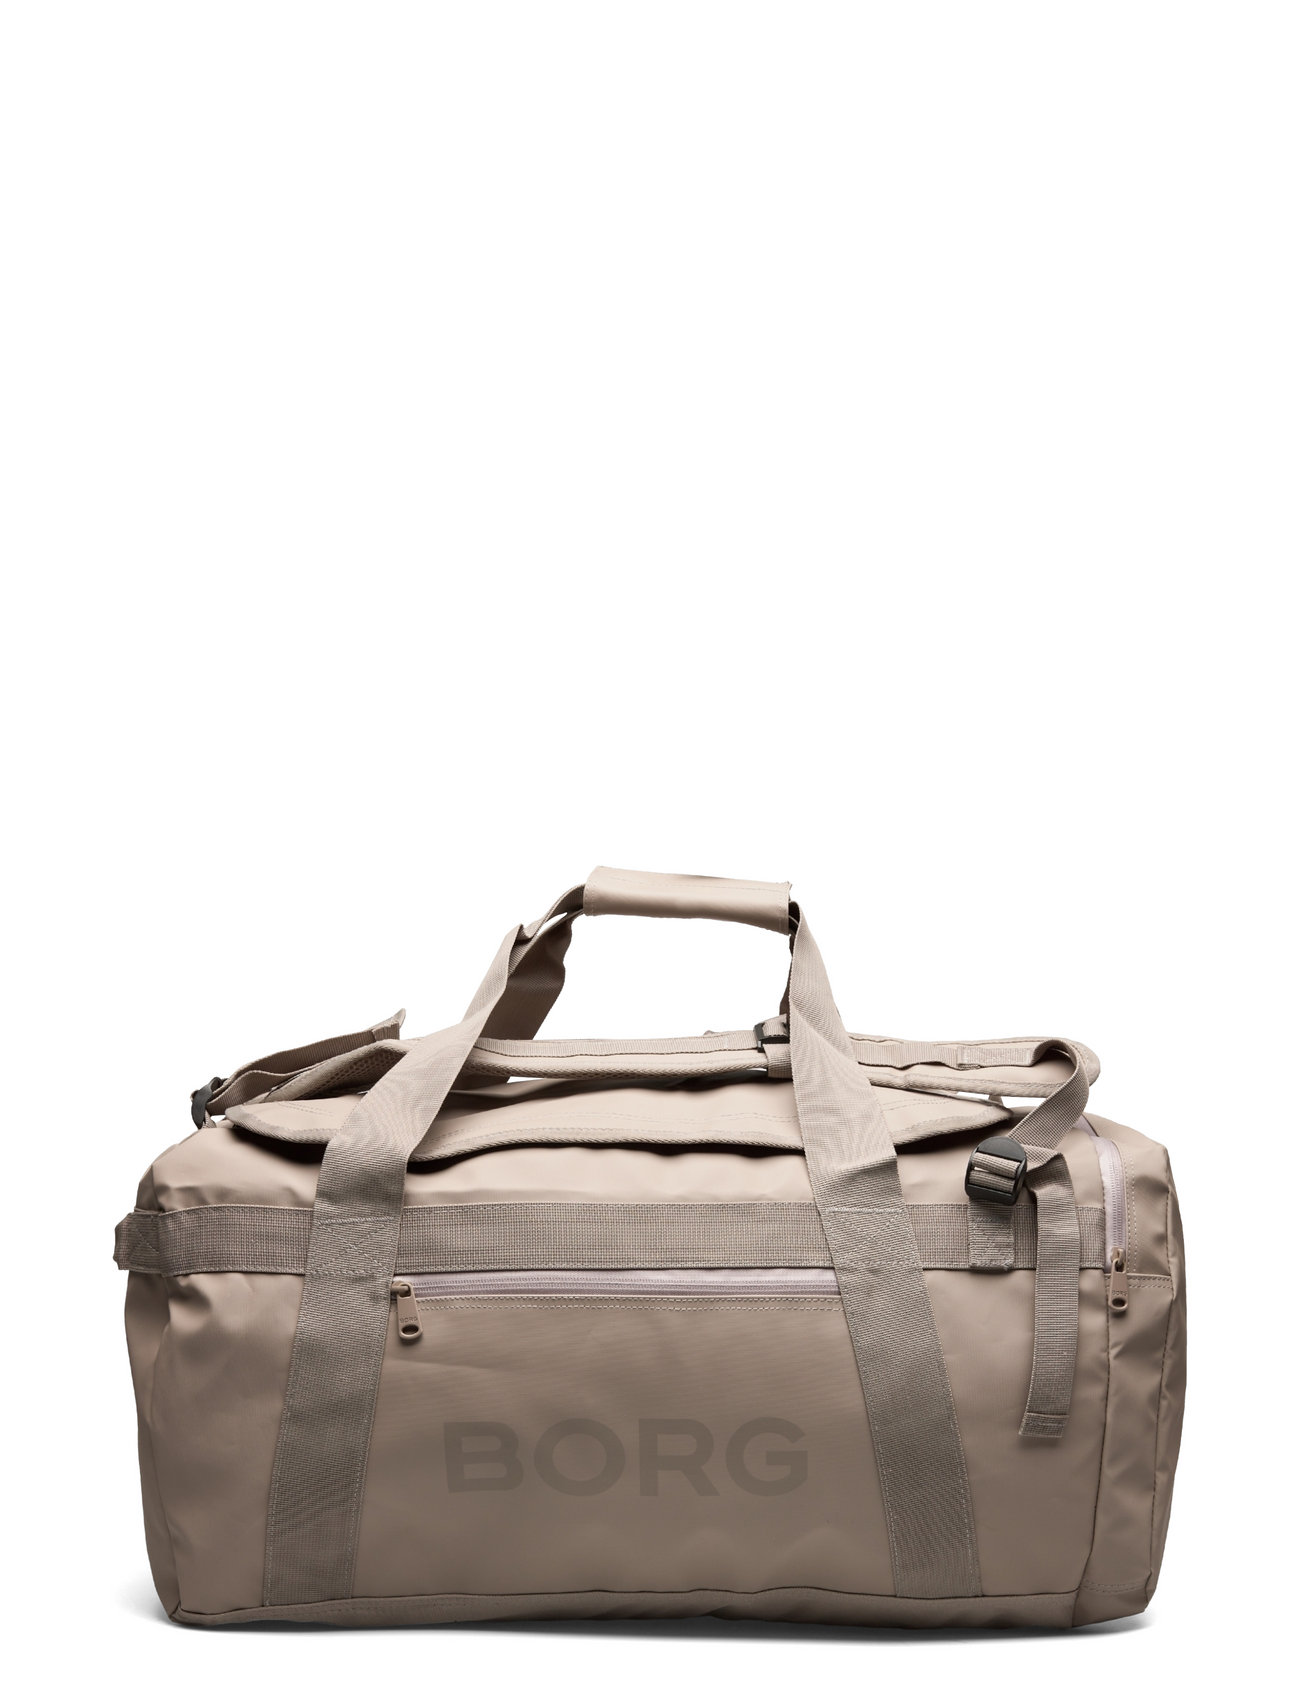 Borg Weekend Bag